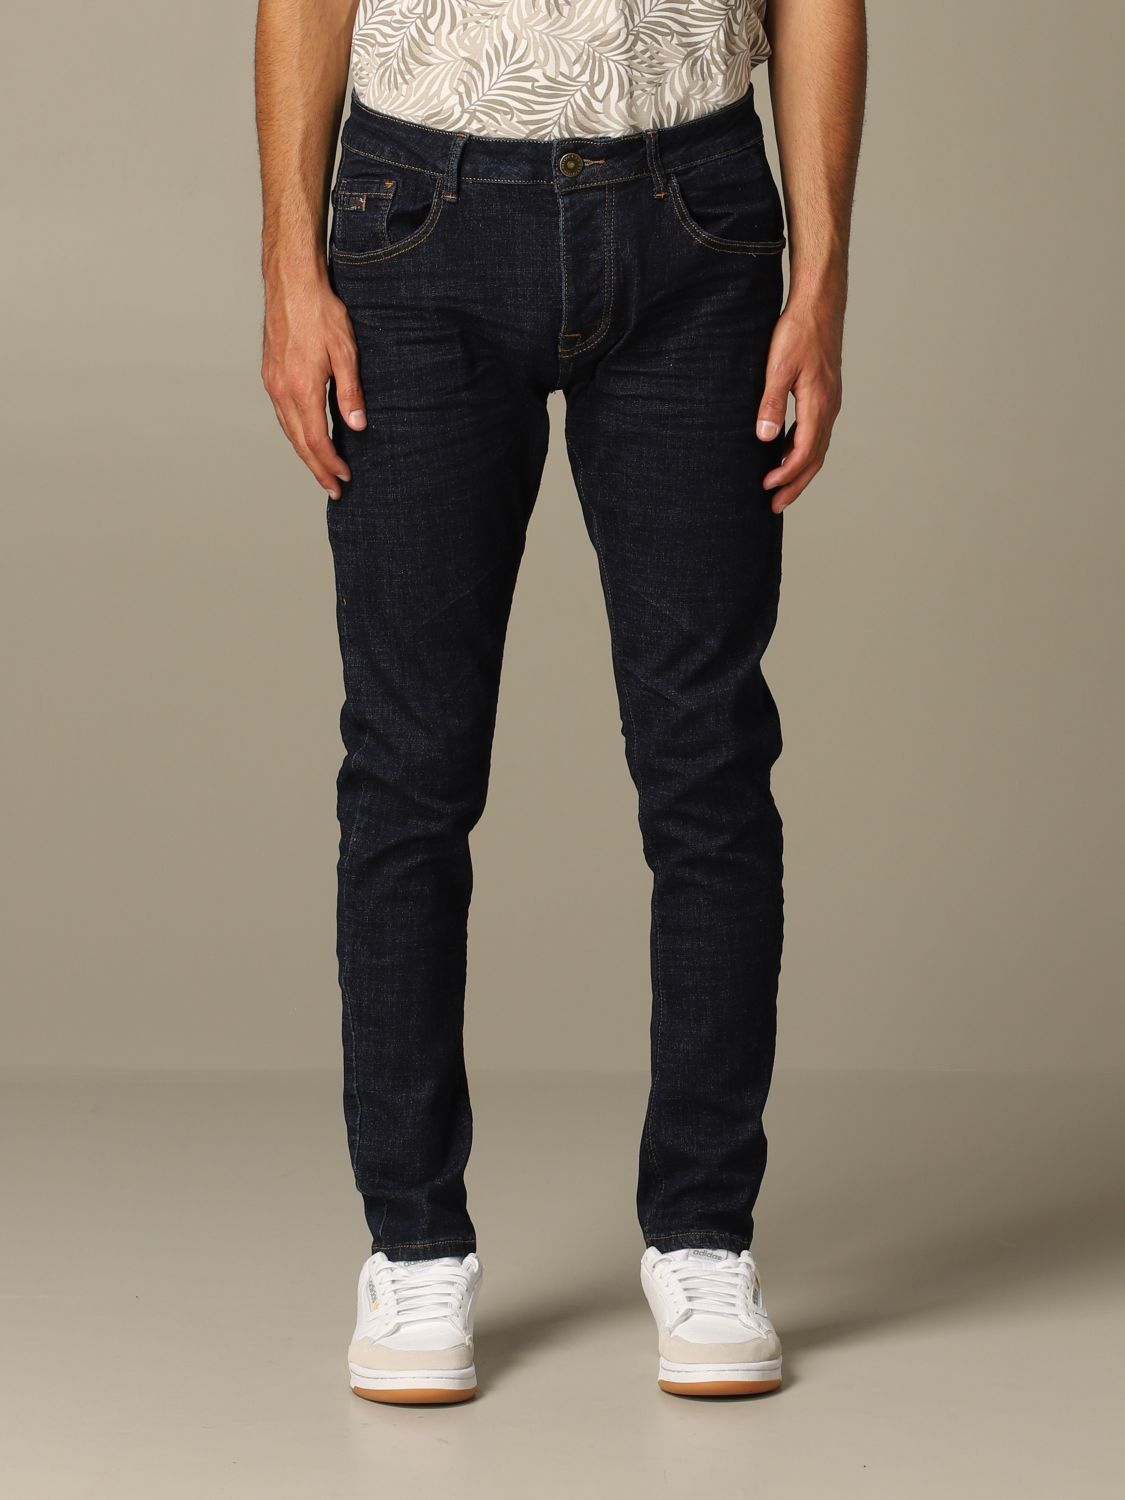 Havana & Co. Outlet: jeans in 5-pocket denim | Pants Havana & Co. Men ...